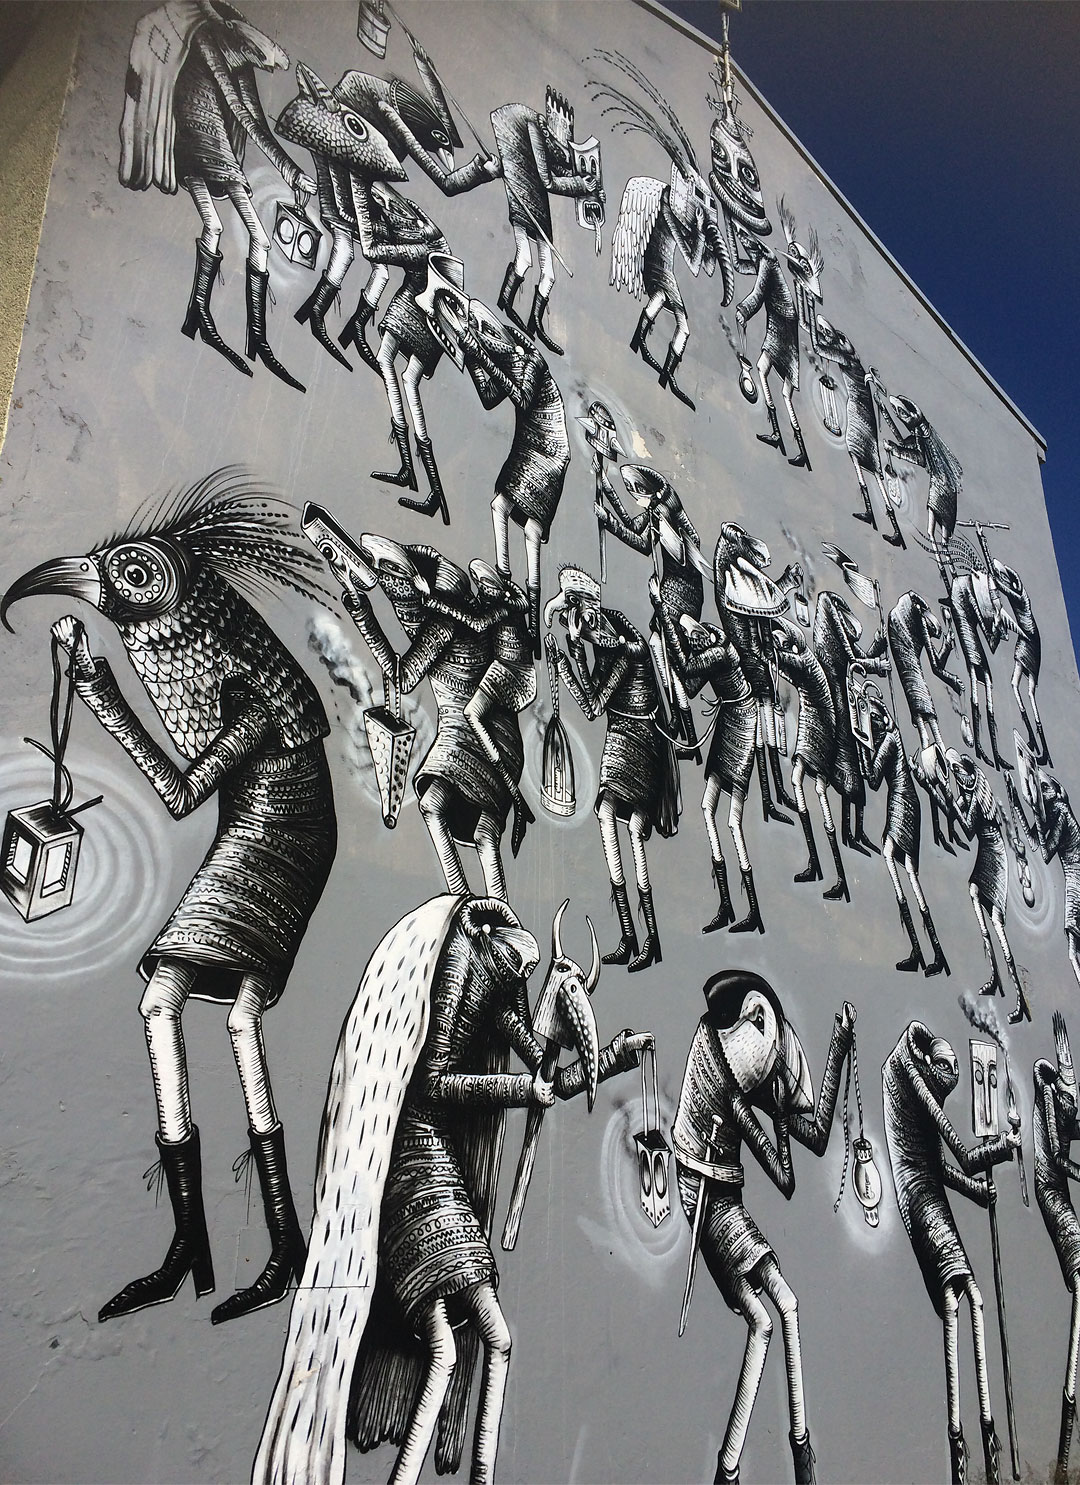 Awesome mural in Reykjavik